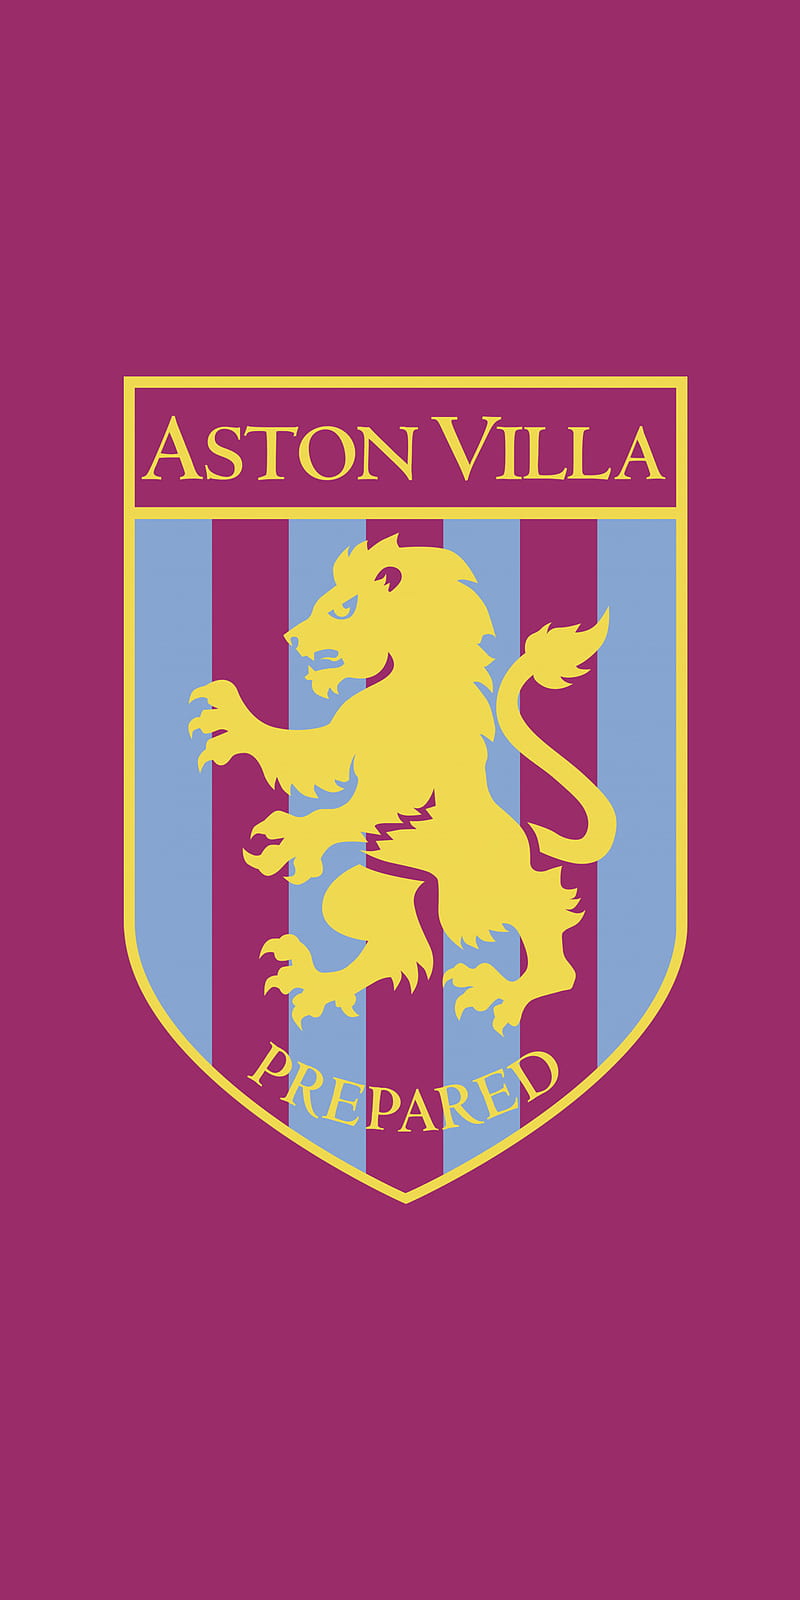 200+] Aston Villa Wallpapers | Wallpapers.com